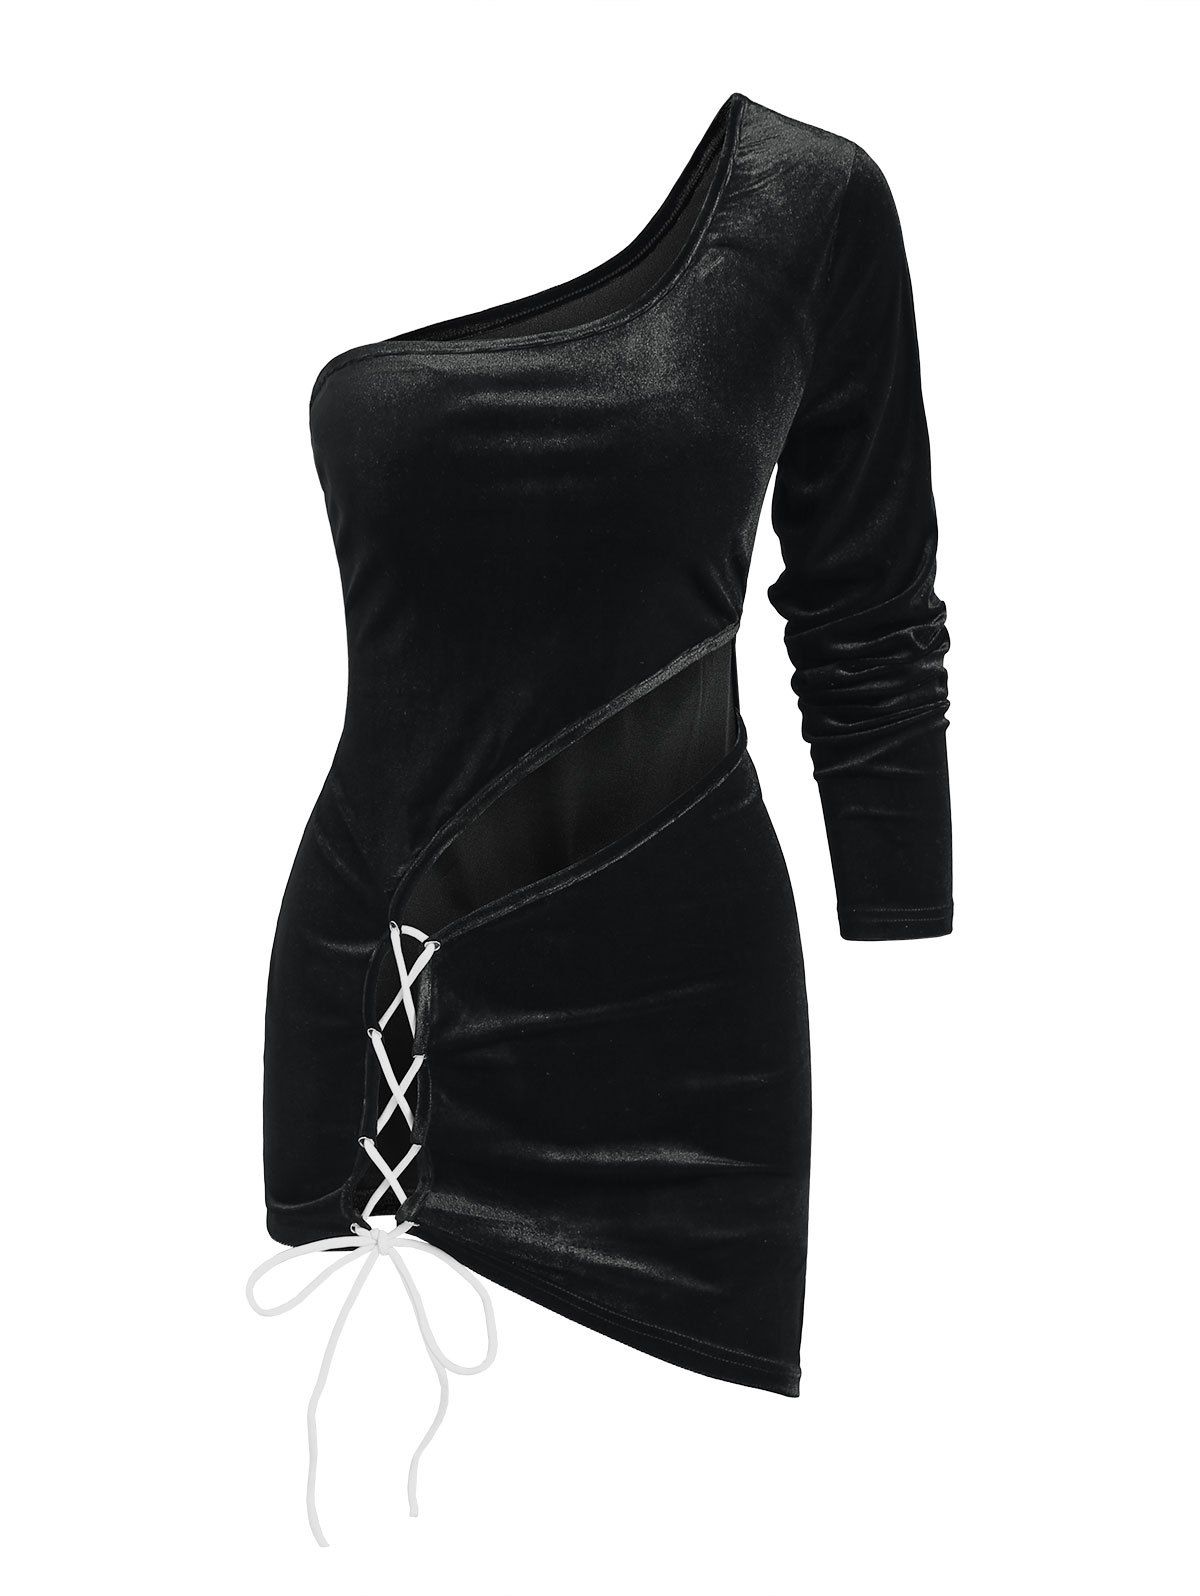 One Shoulder Cut Out Asymmetrical Bodycon Dress - BLACK L